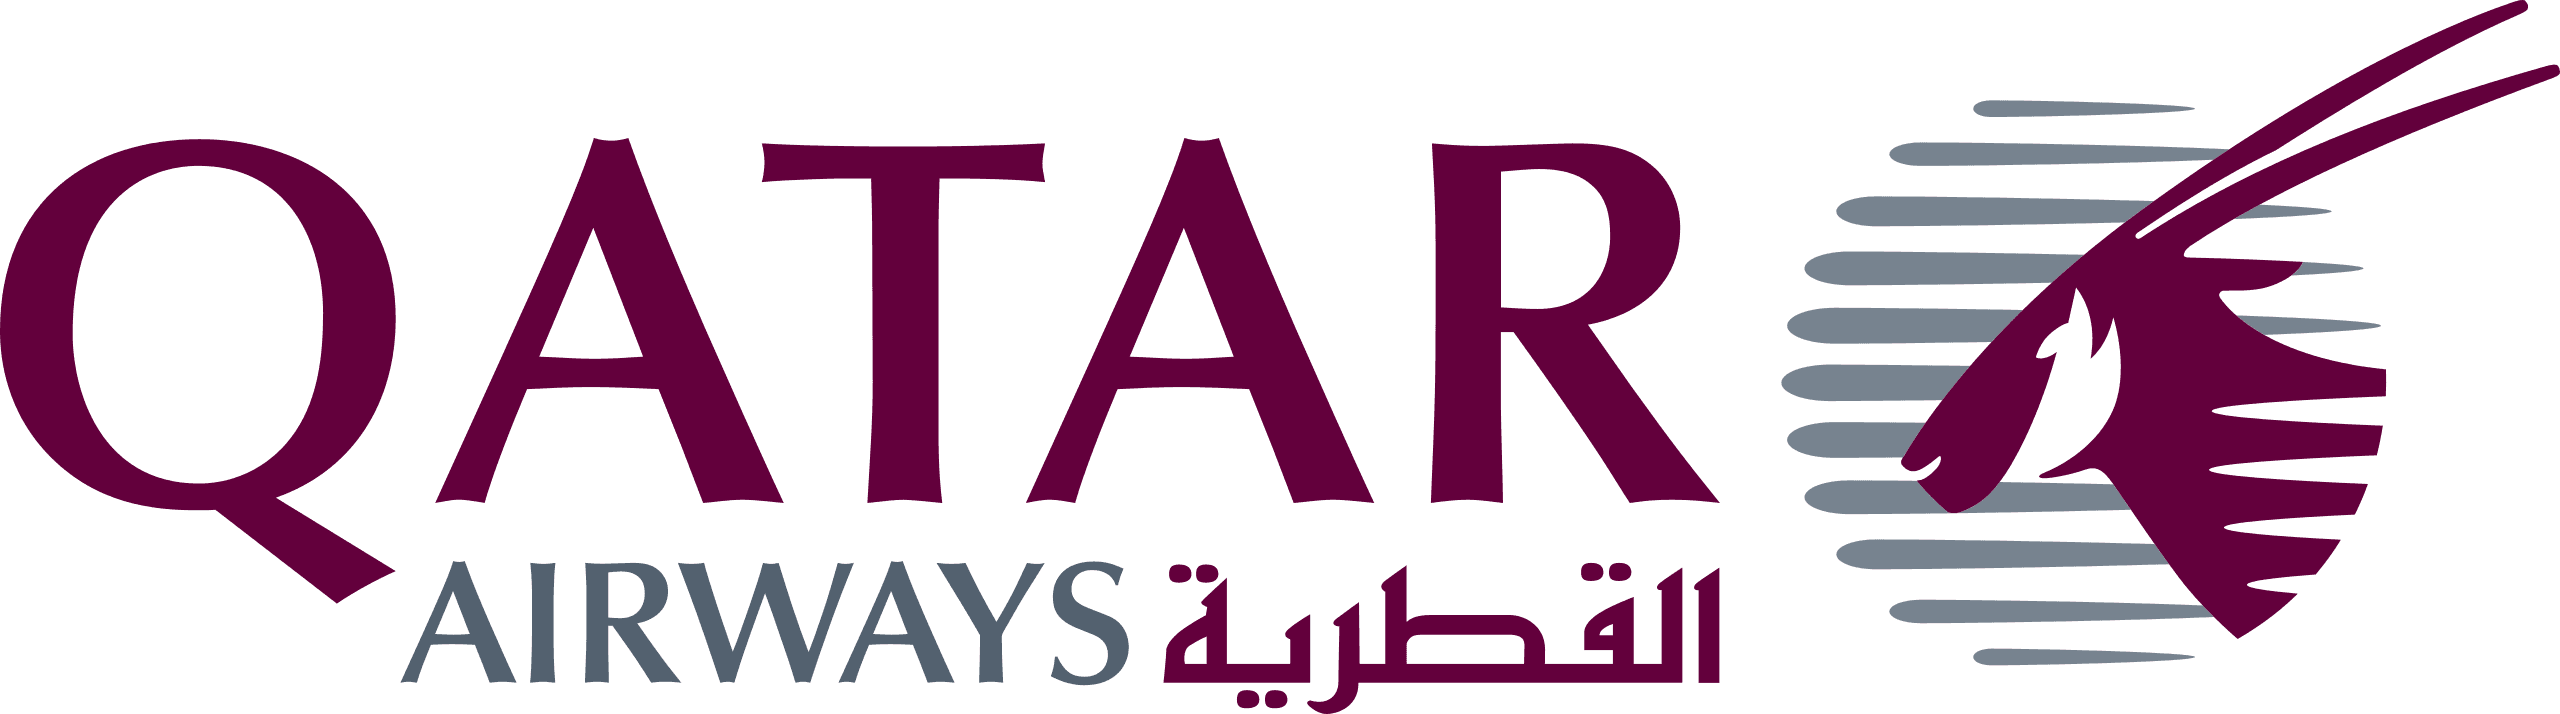 Qatar Airways-coupons